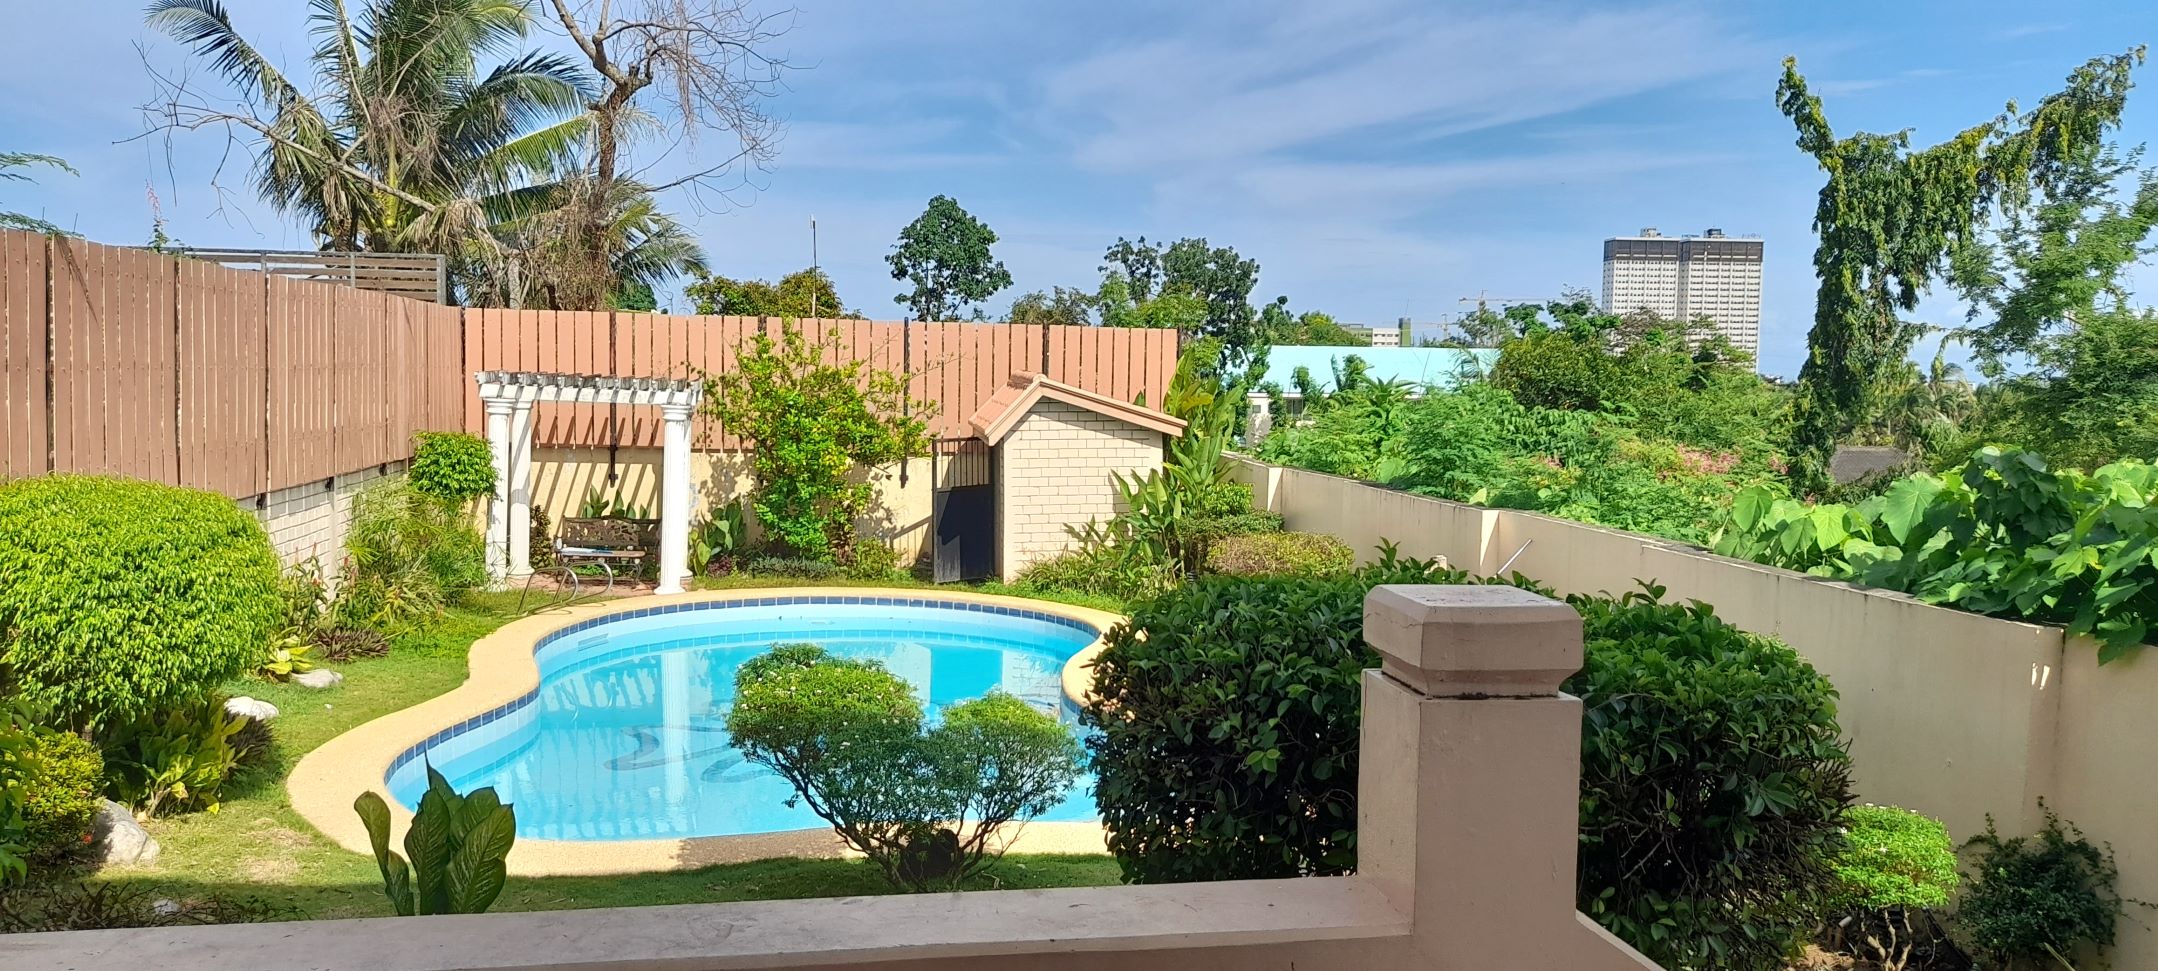 4-bedroom-house-with-swimming-pool-in-banilad-cebu-city-cebu